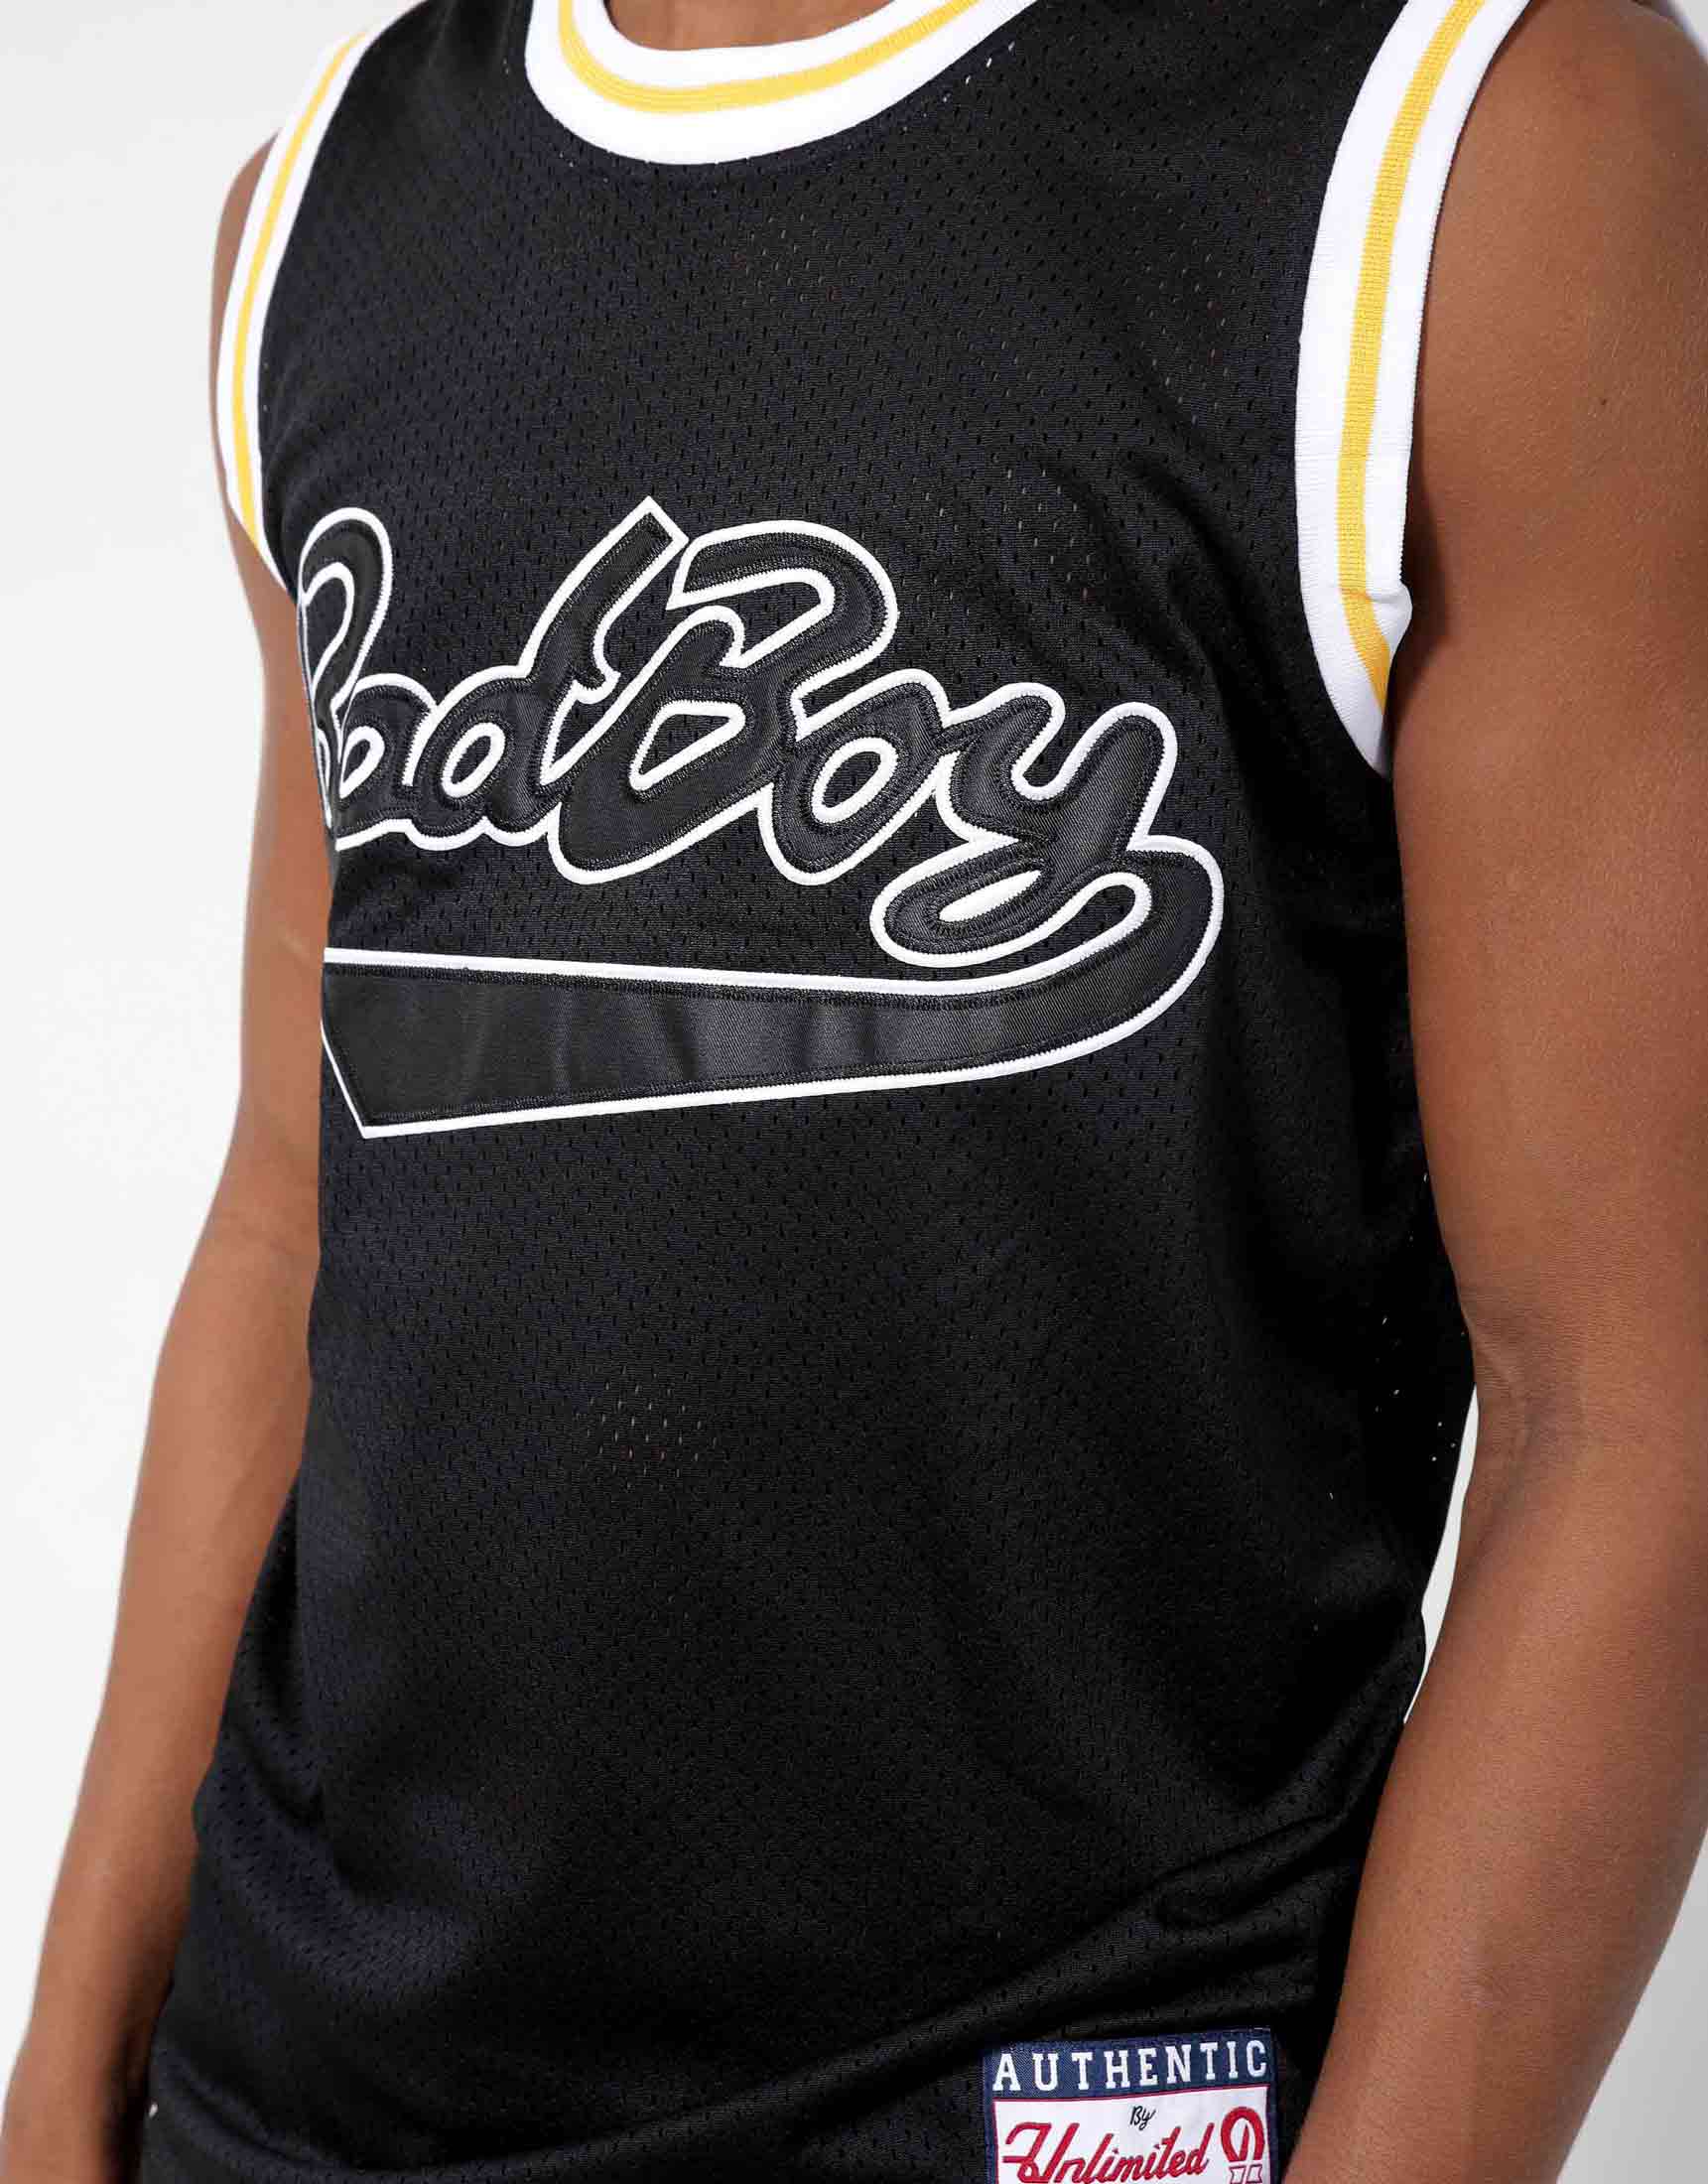 High School Basketball Jersey Notorious B.I.G. Biggie Smalls #72 Bad Boy Yellow